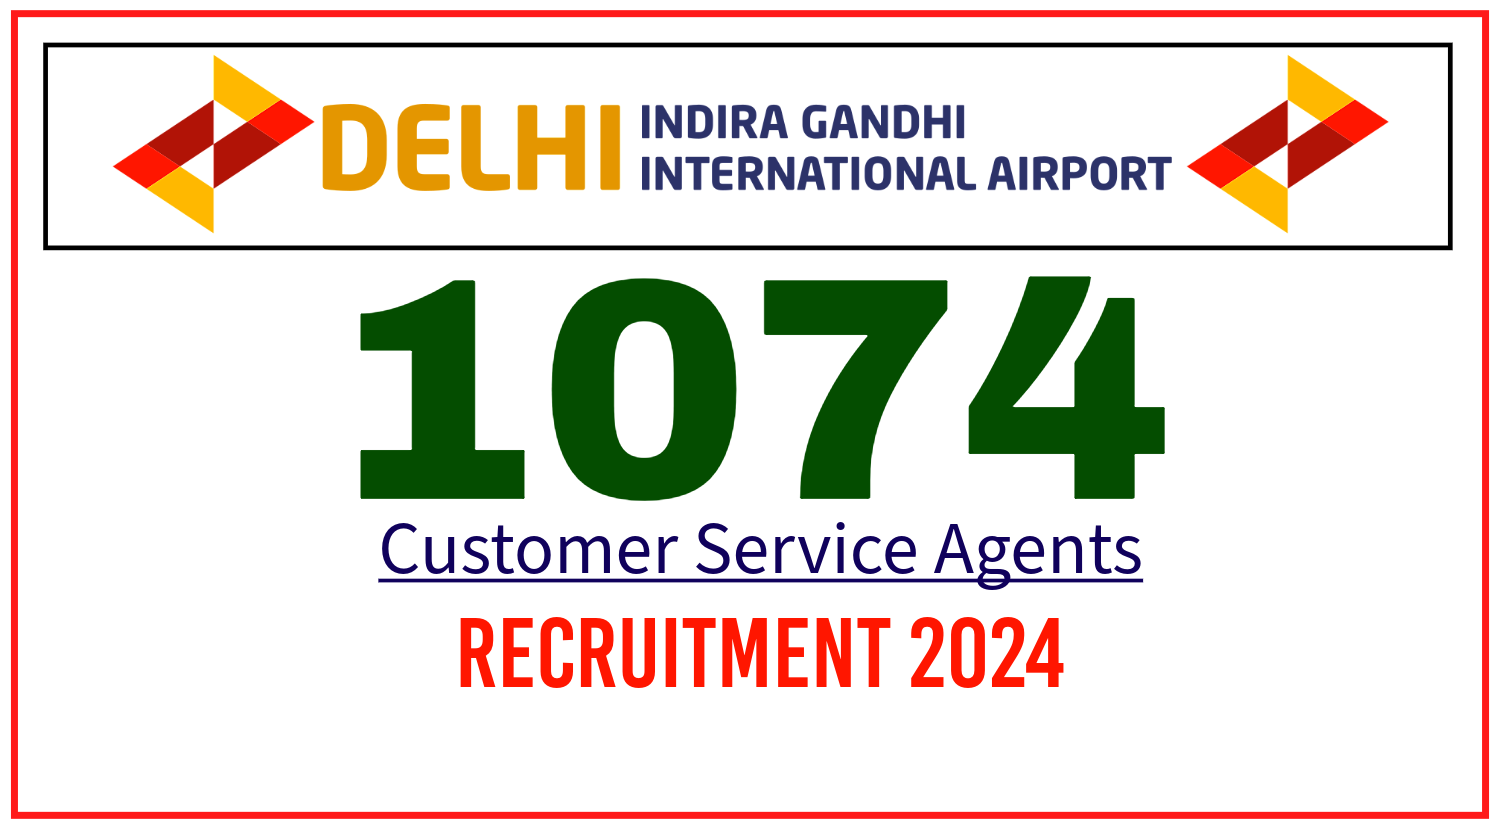 IGI Aviation Services Recruitment 2024 for 1074 Customer Service Agent